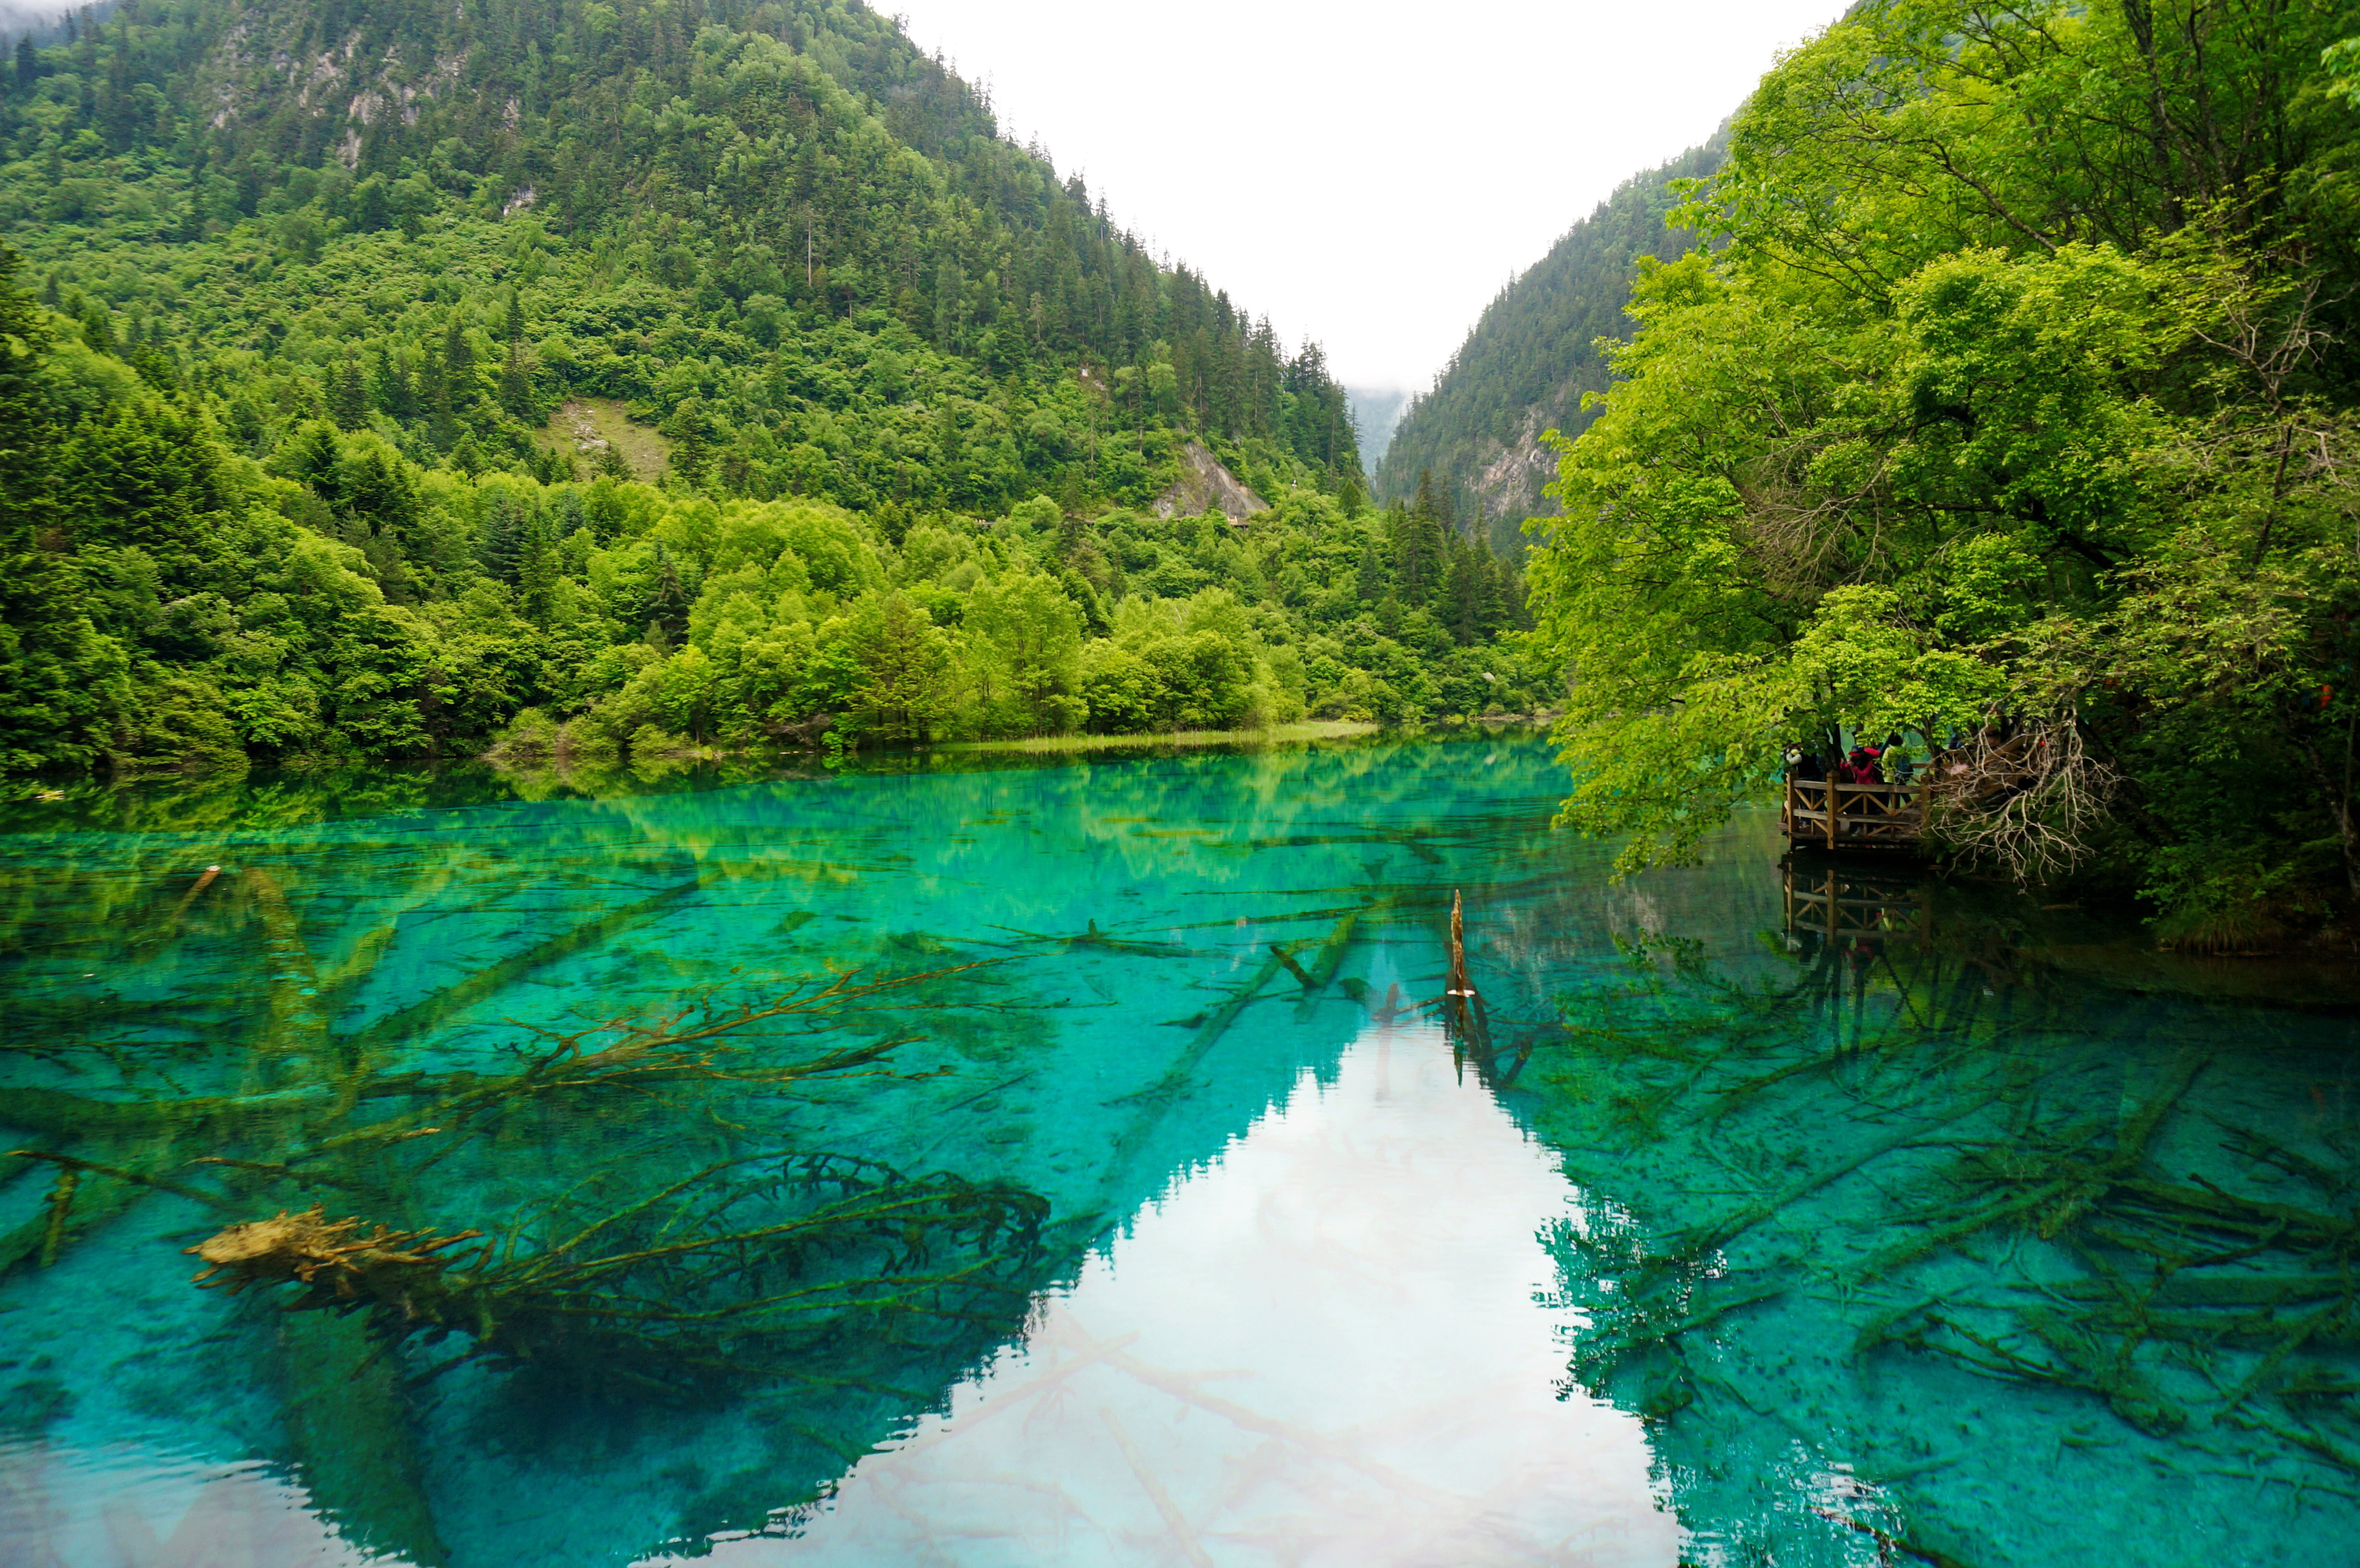 Jiuzhaigou Landscape With Green Water In Sichuan China Image Free